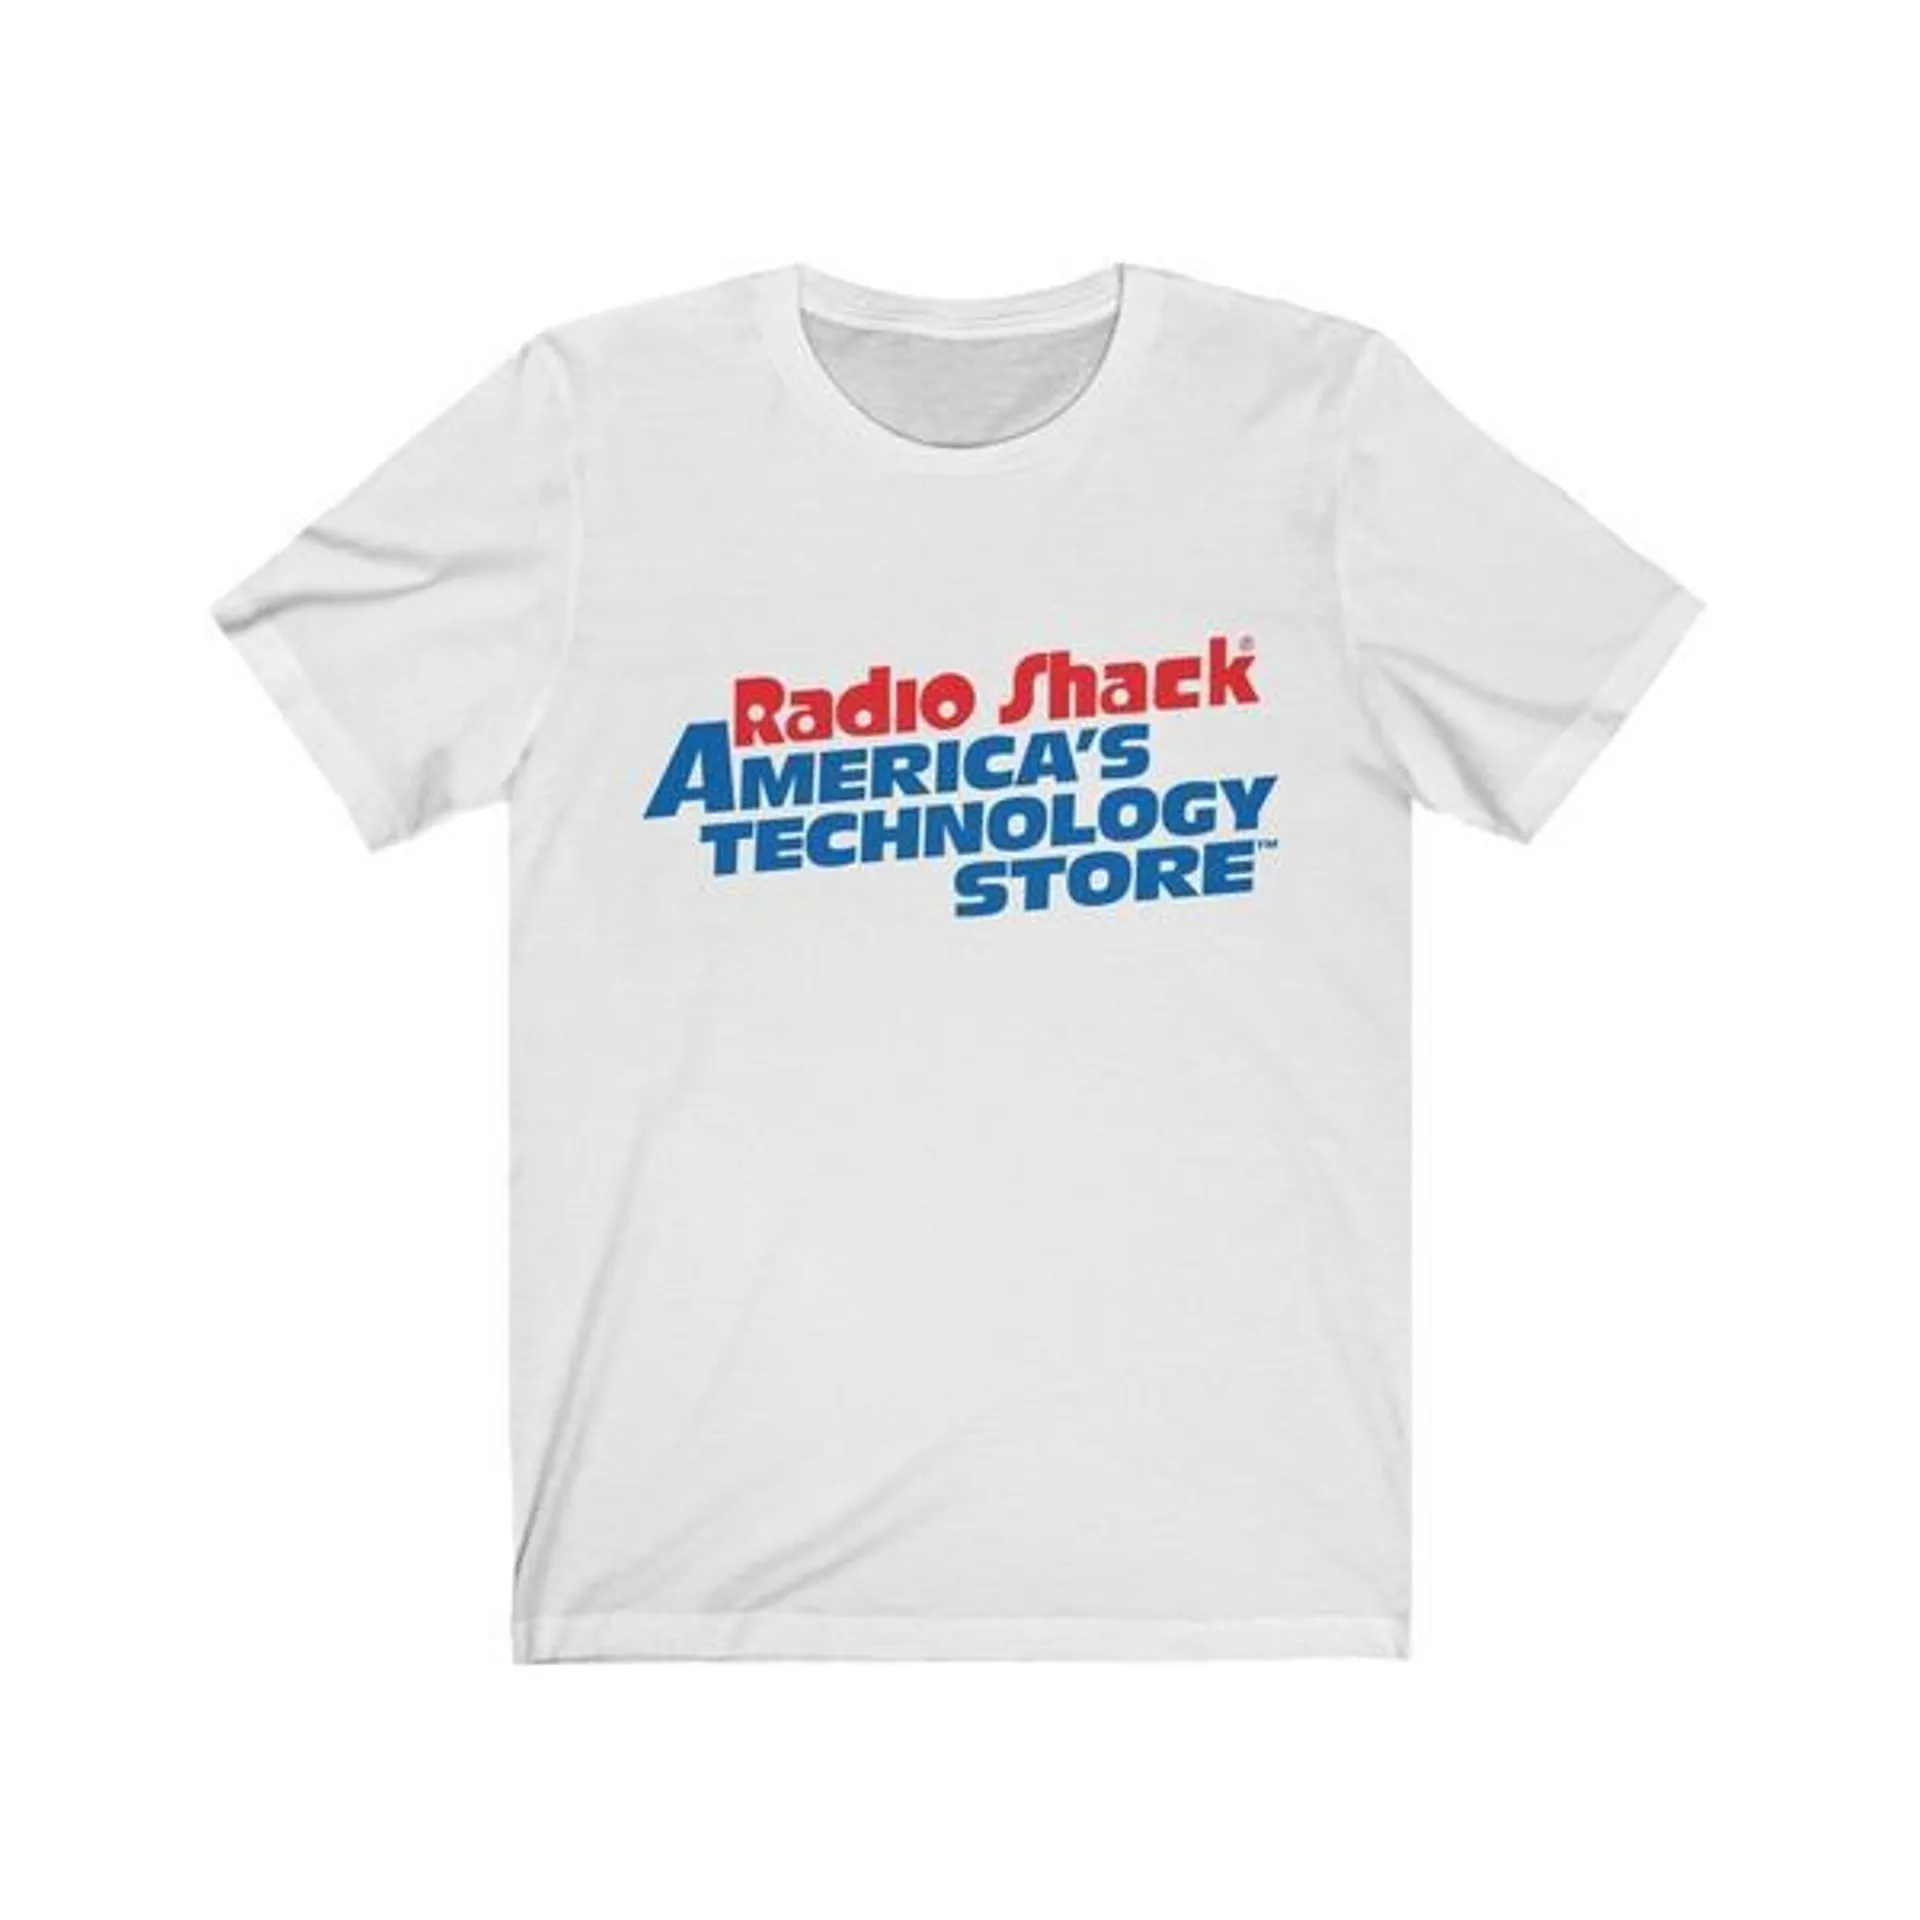 RadioShack: America's Technology Store Retro T-Shirt